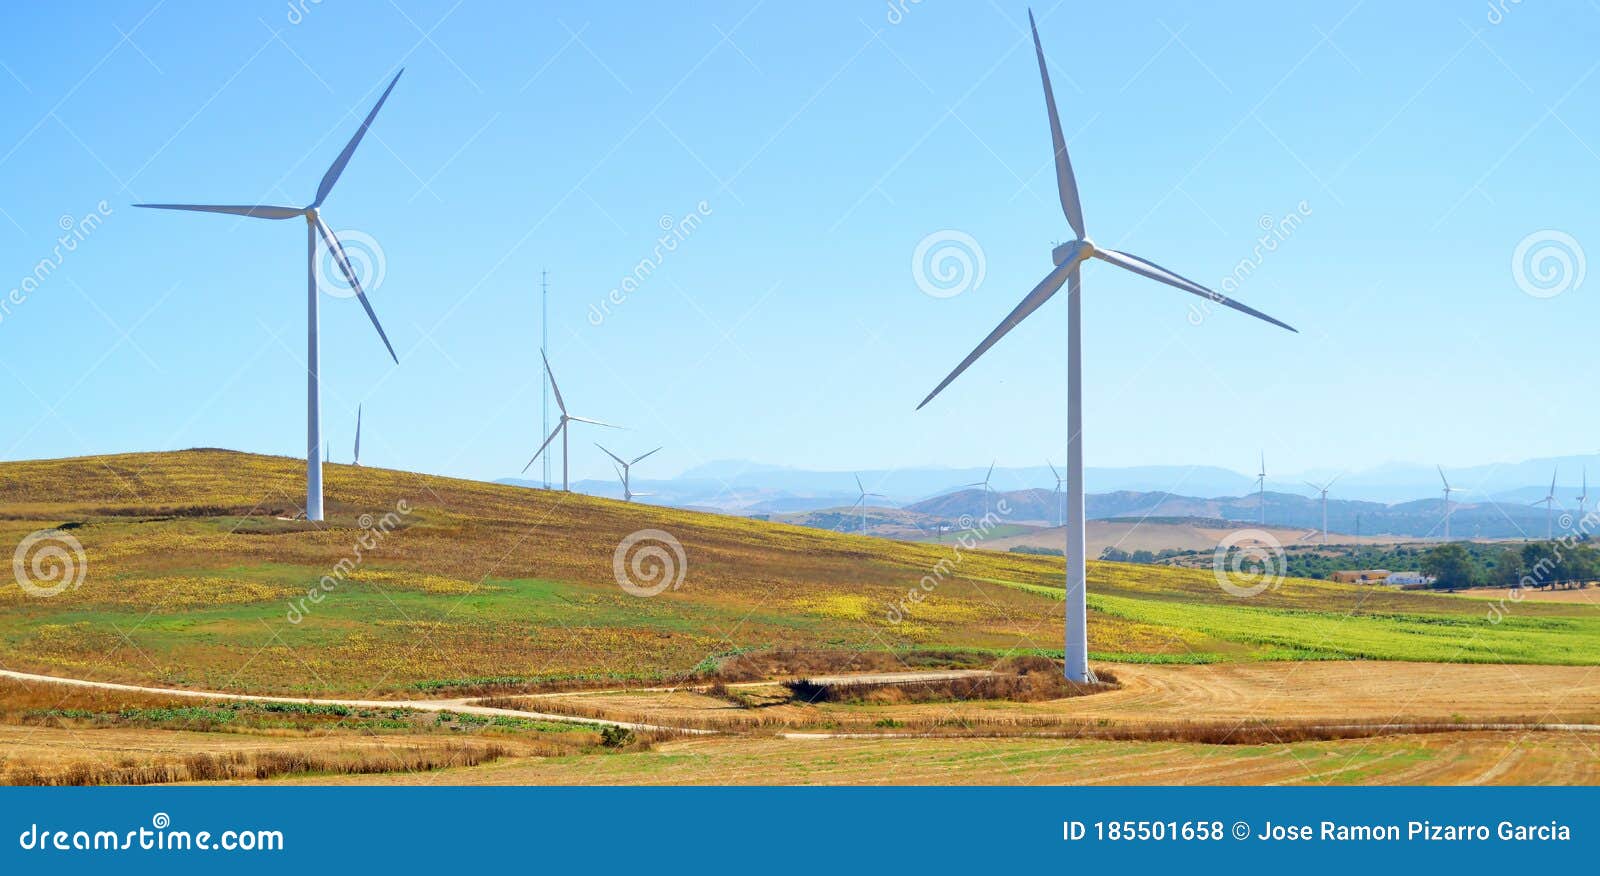 wind energy in spain. windmills in tarifa, province of cadiz, spain, southern europe